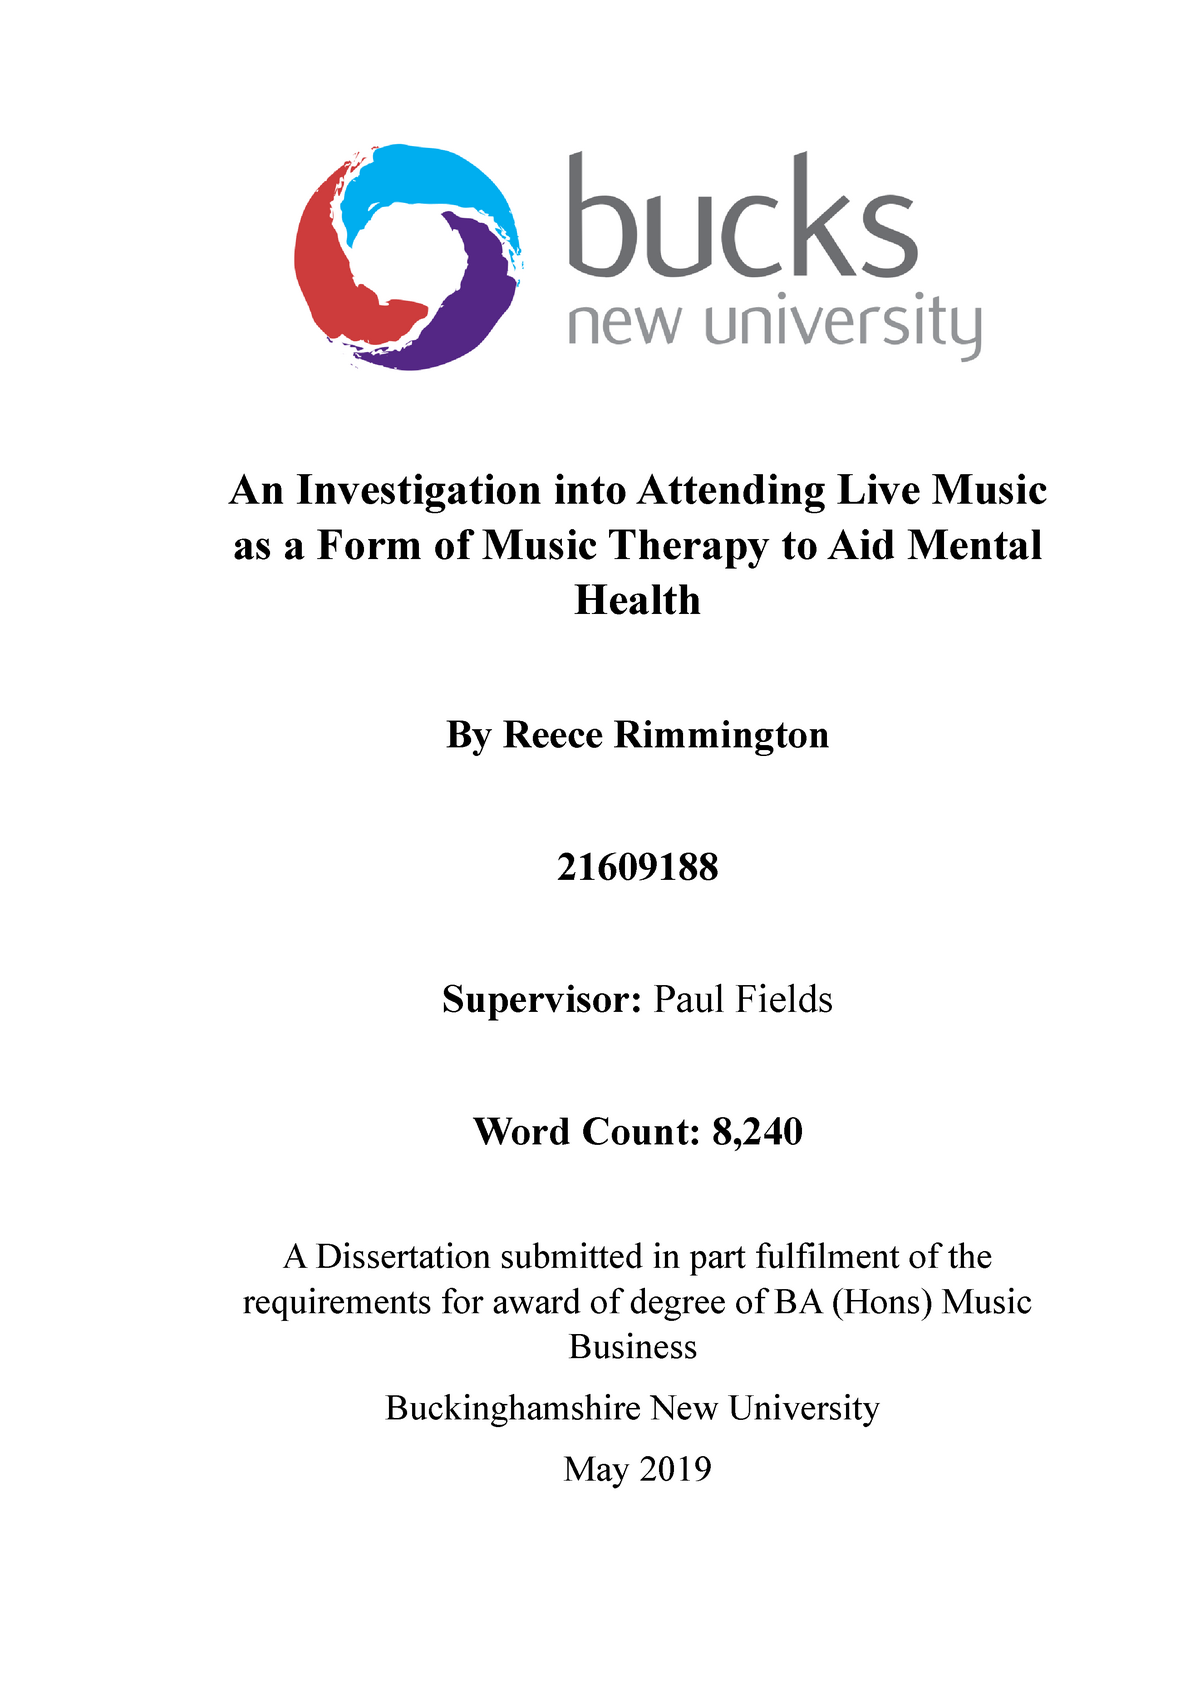 dissertation topics music industry